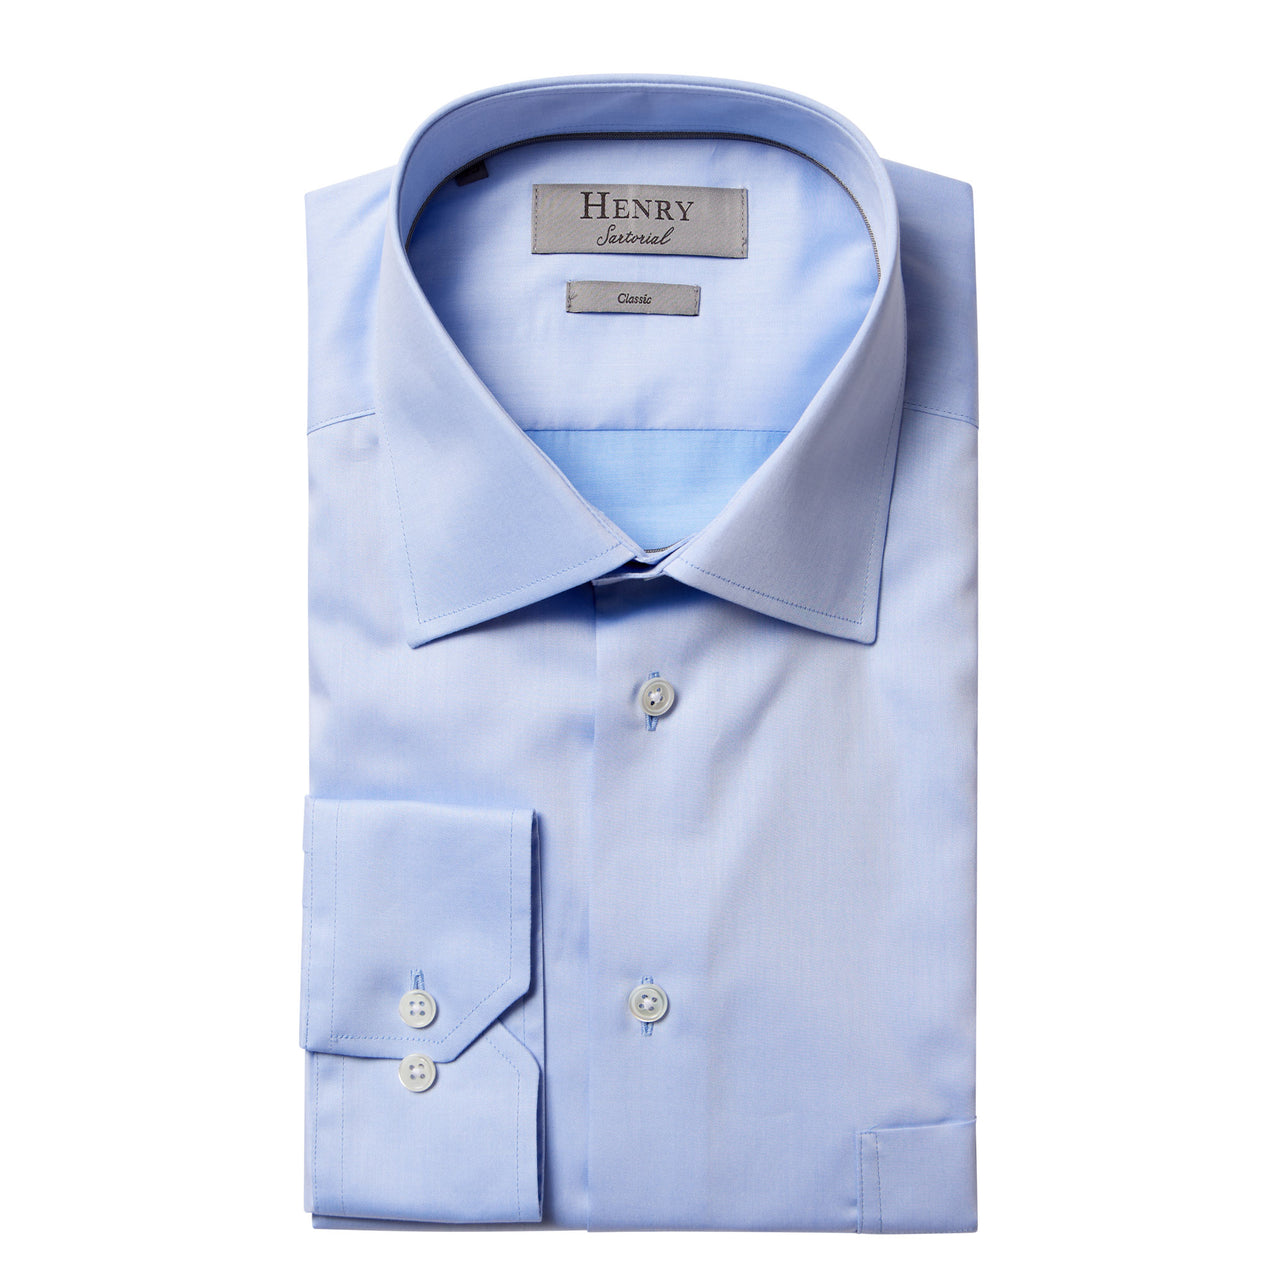 HENRY SARTORIAL Plain Twill Business Shirt Single Cuff Classic Fit LIGHT BLUE